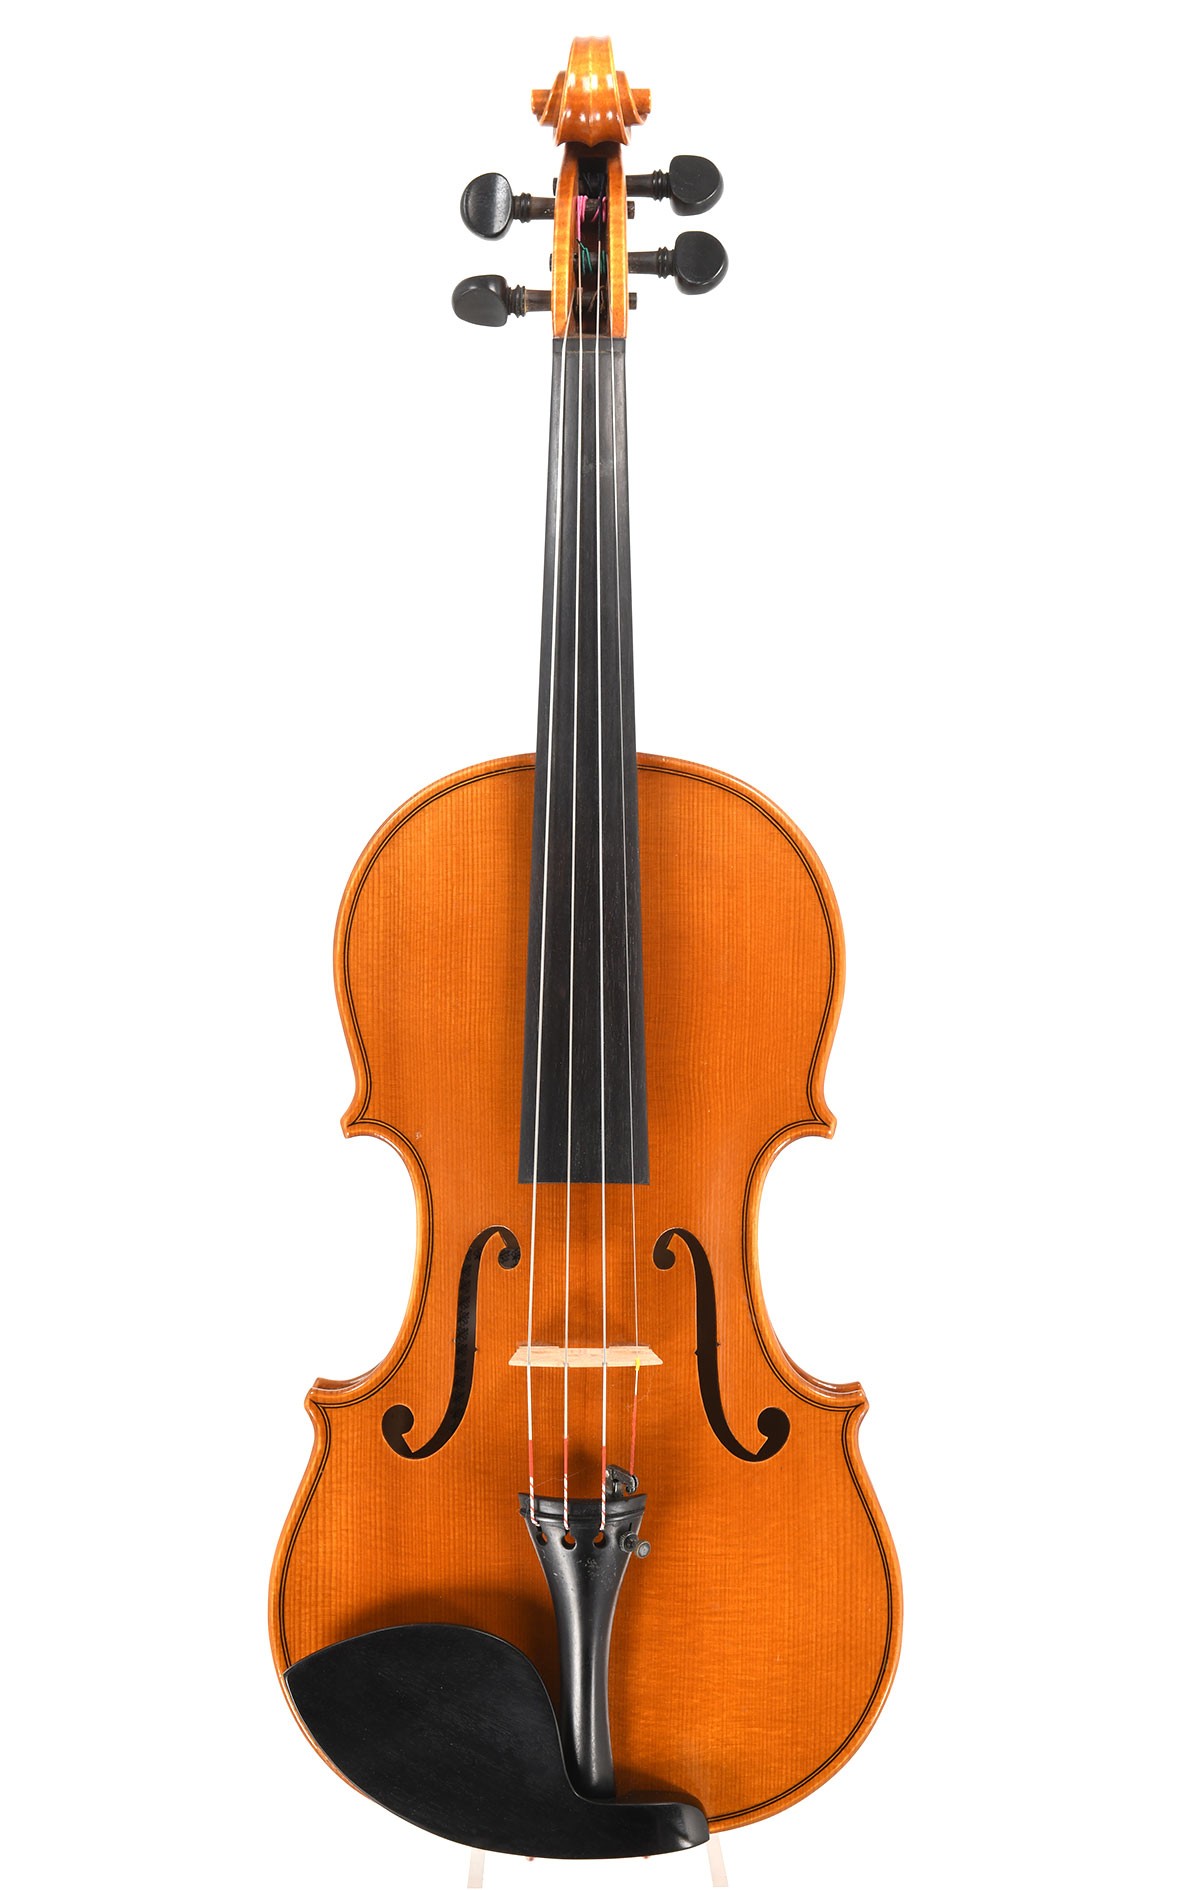 Jean-Jacques Pages工作室的 "Nicolas Mansuy "品牌的法国小提琴